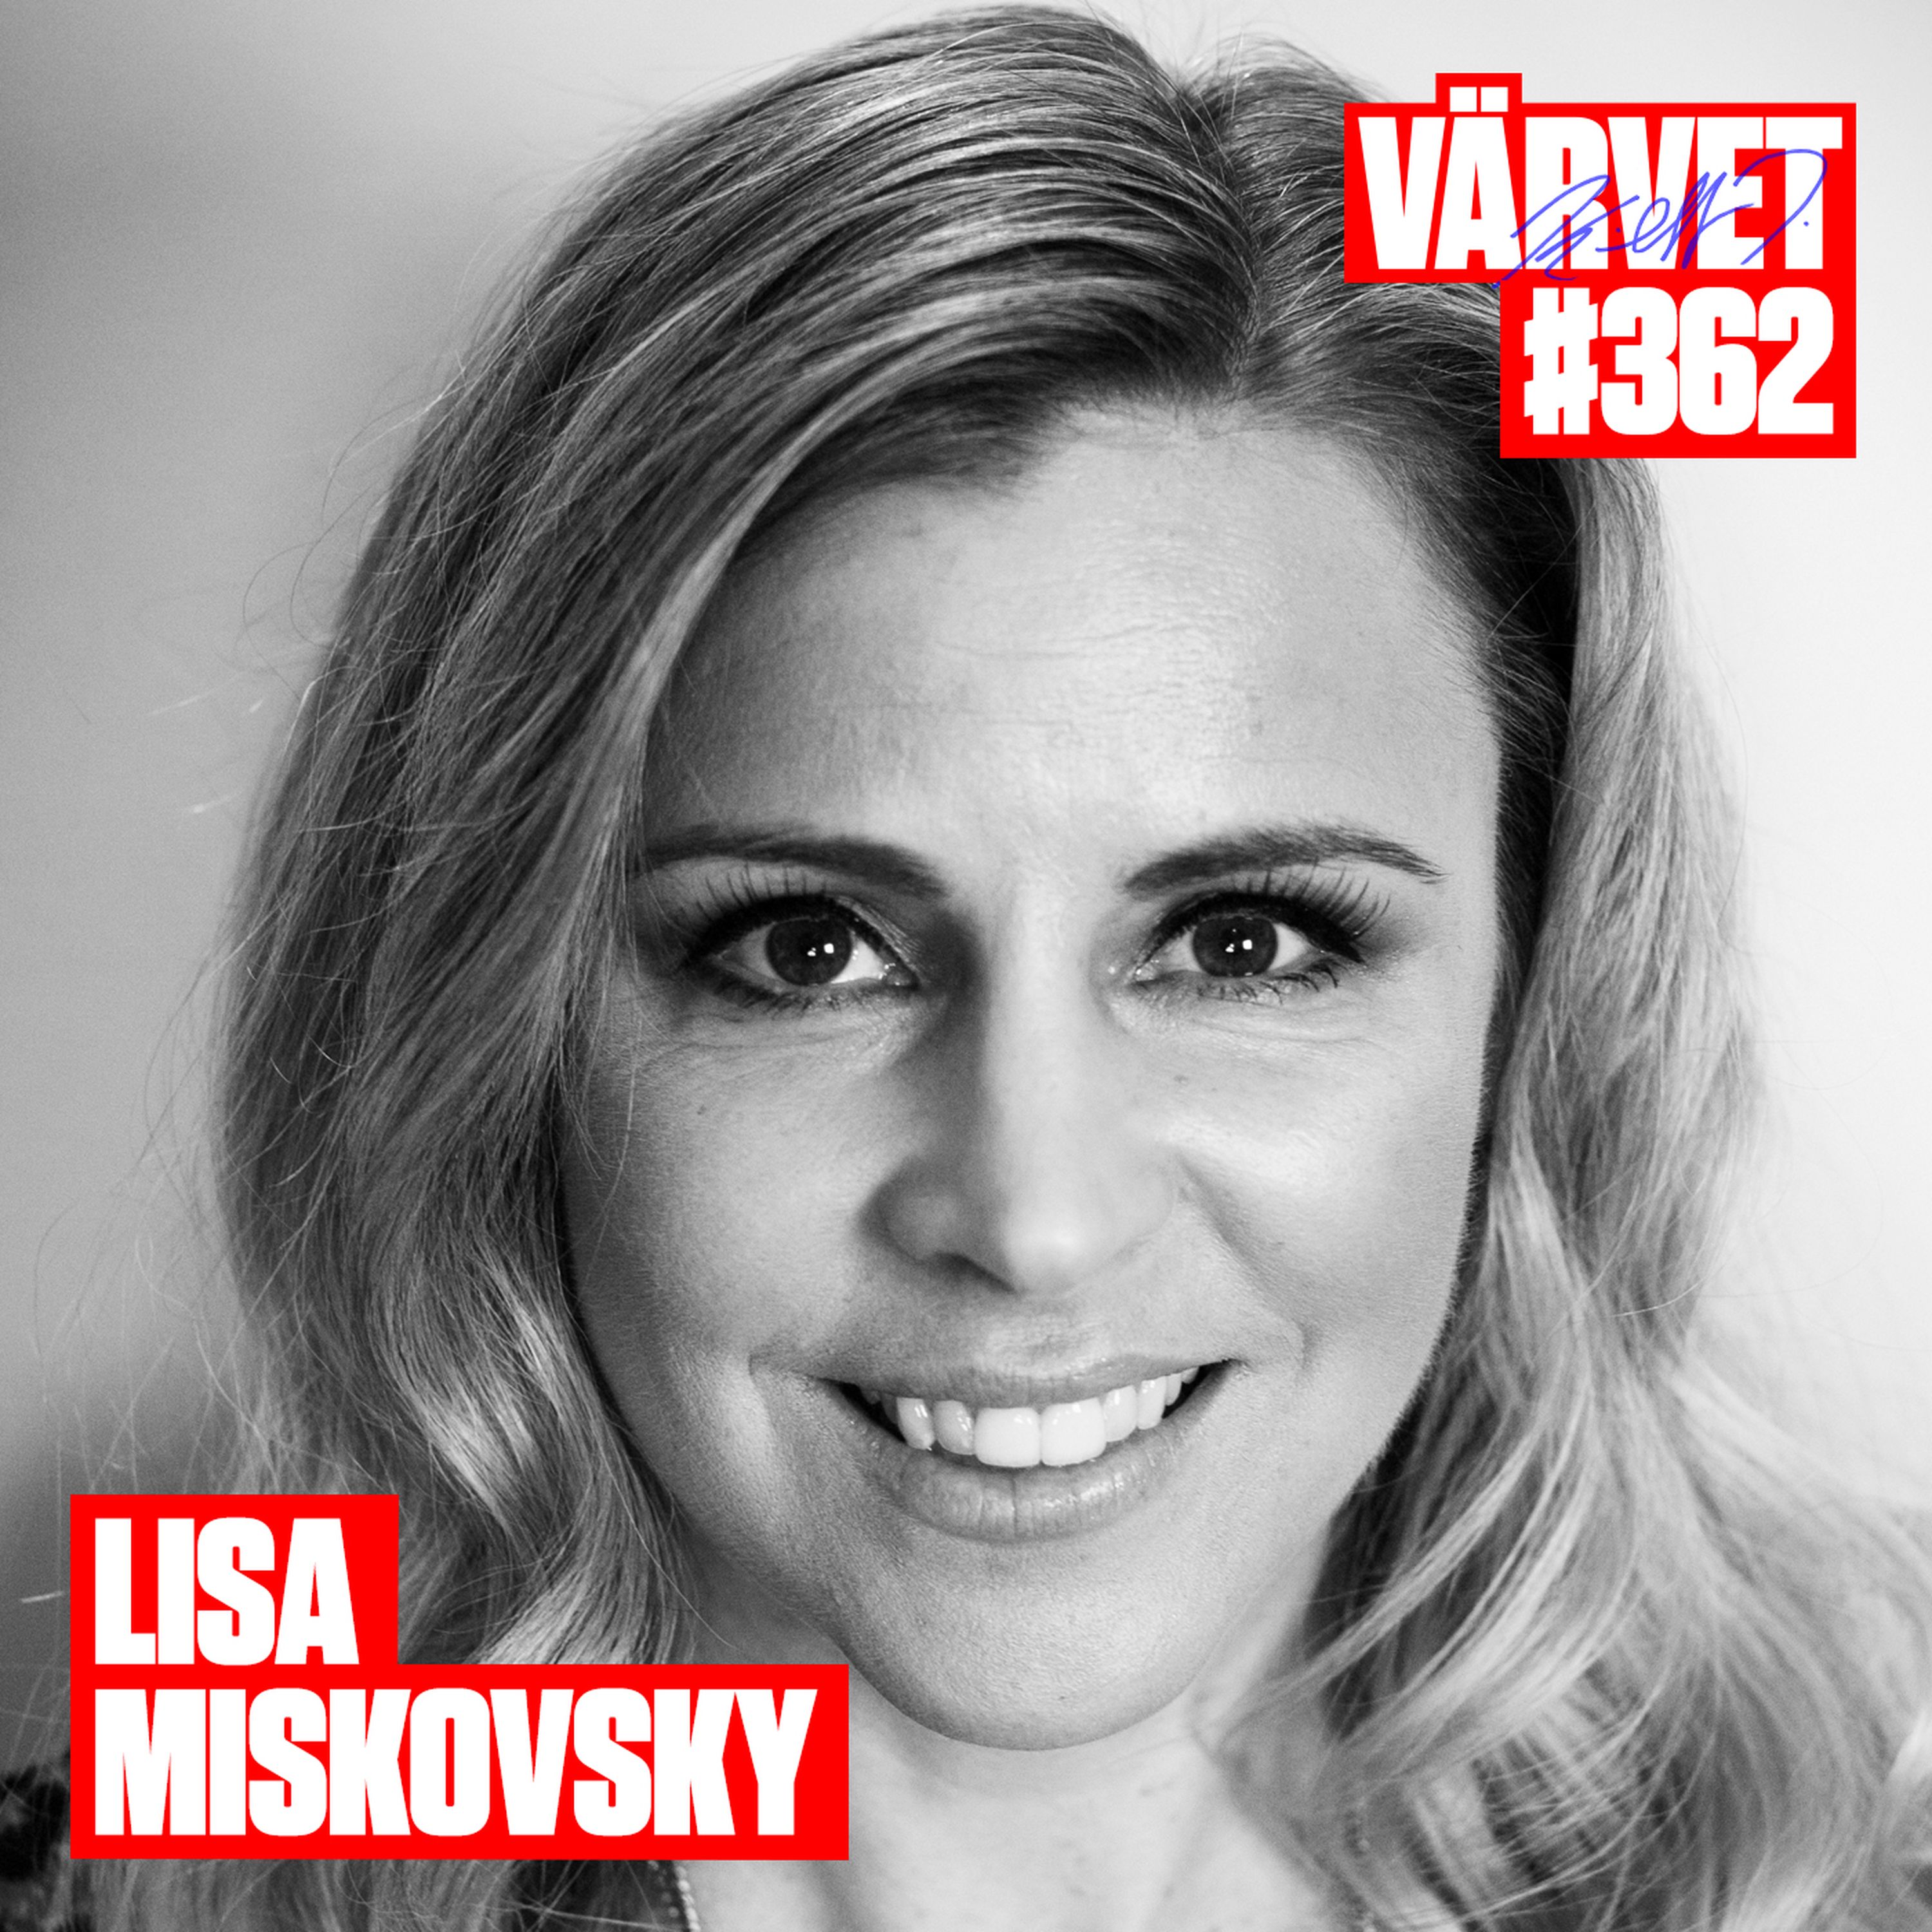 #362: Lisa Miskovsky